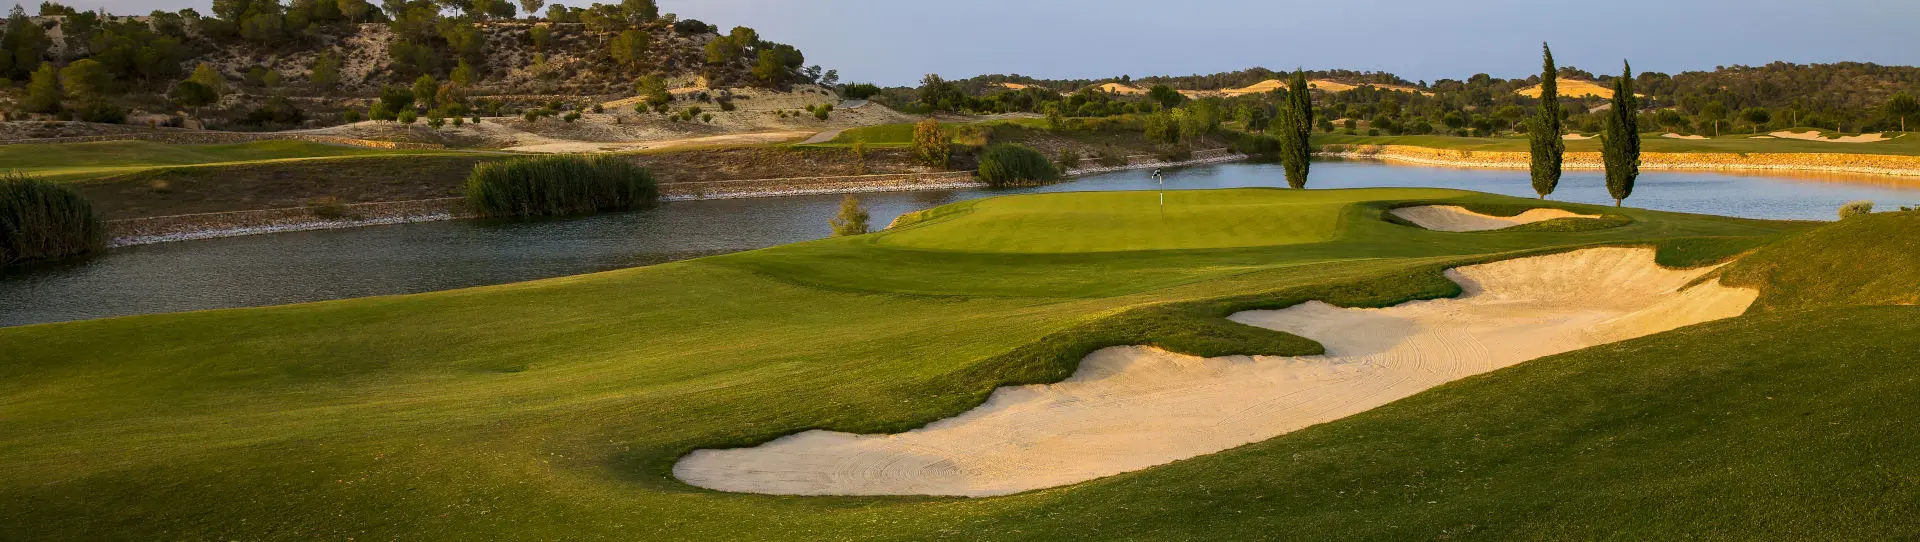 Spain golf courses - Las Colinas Golf & Country Club - Photo 2